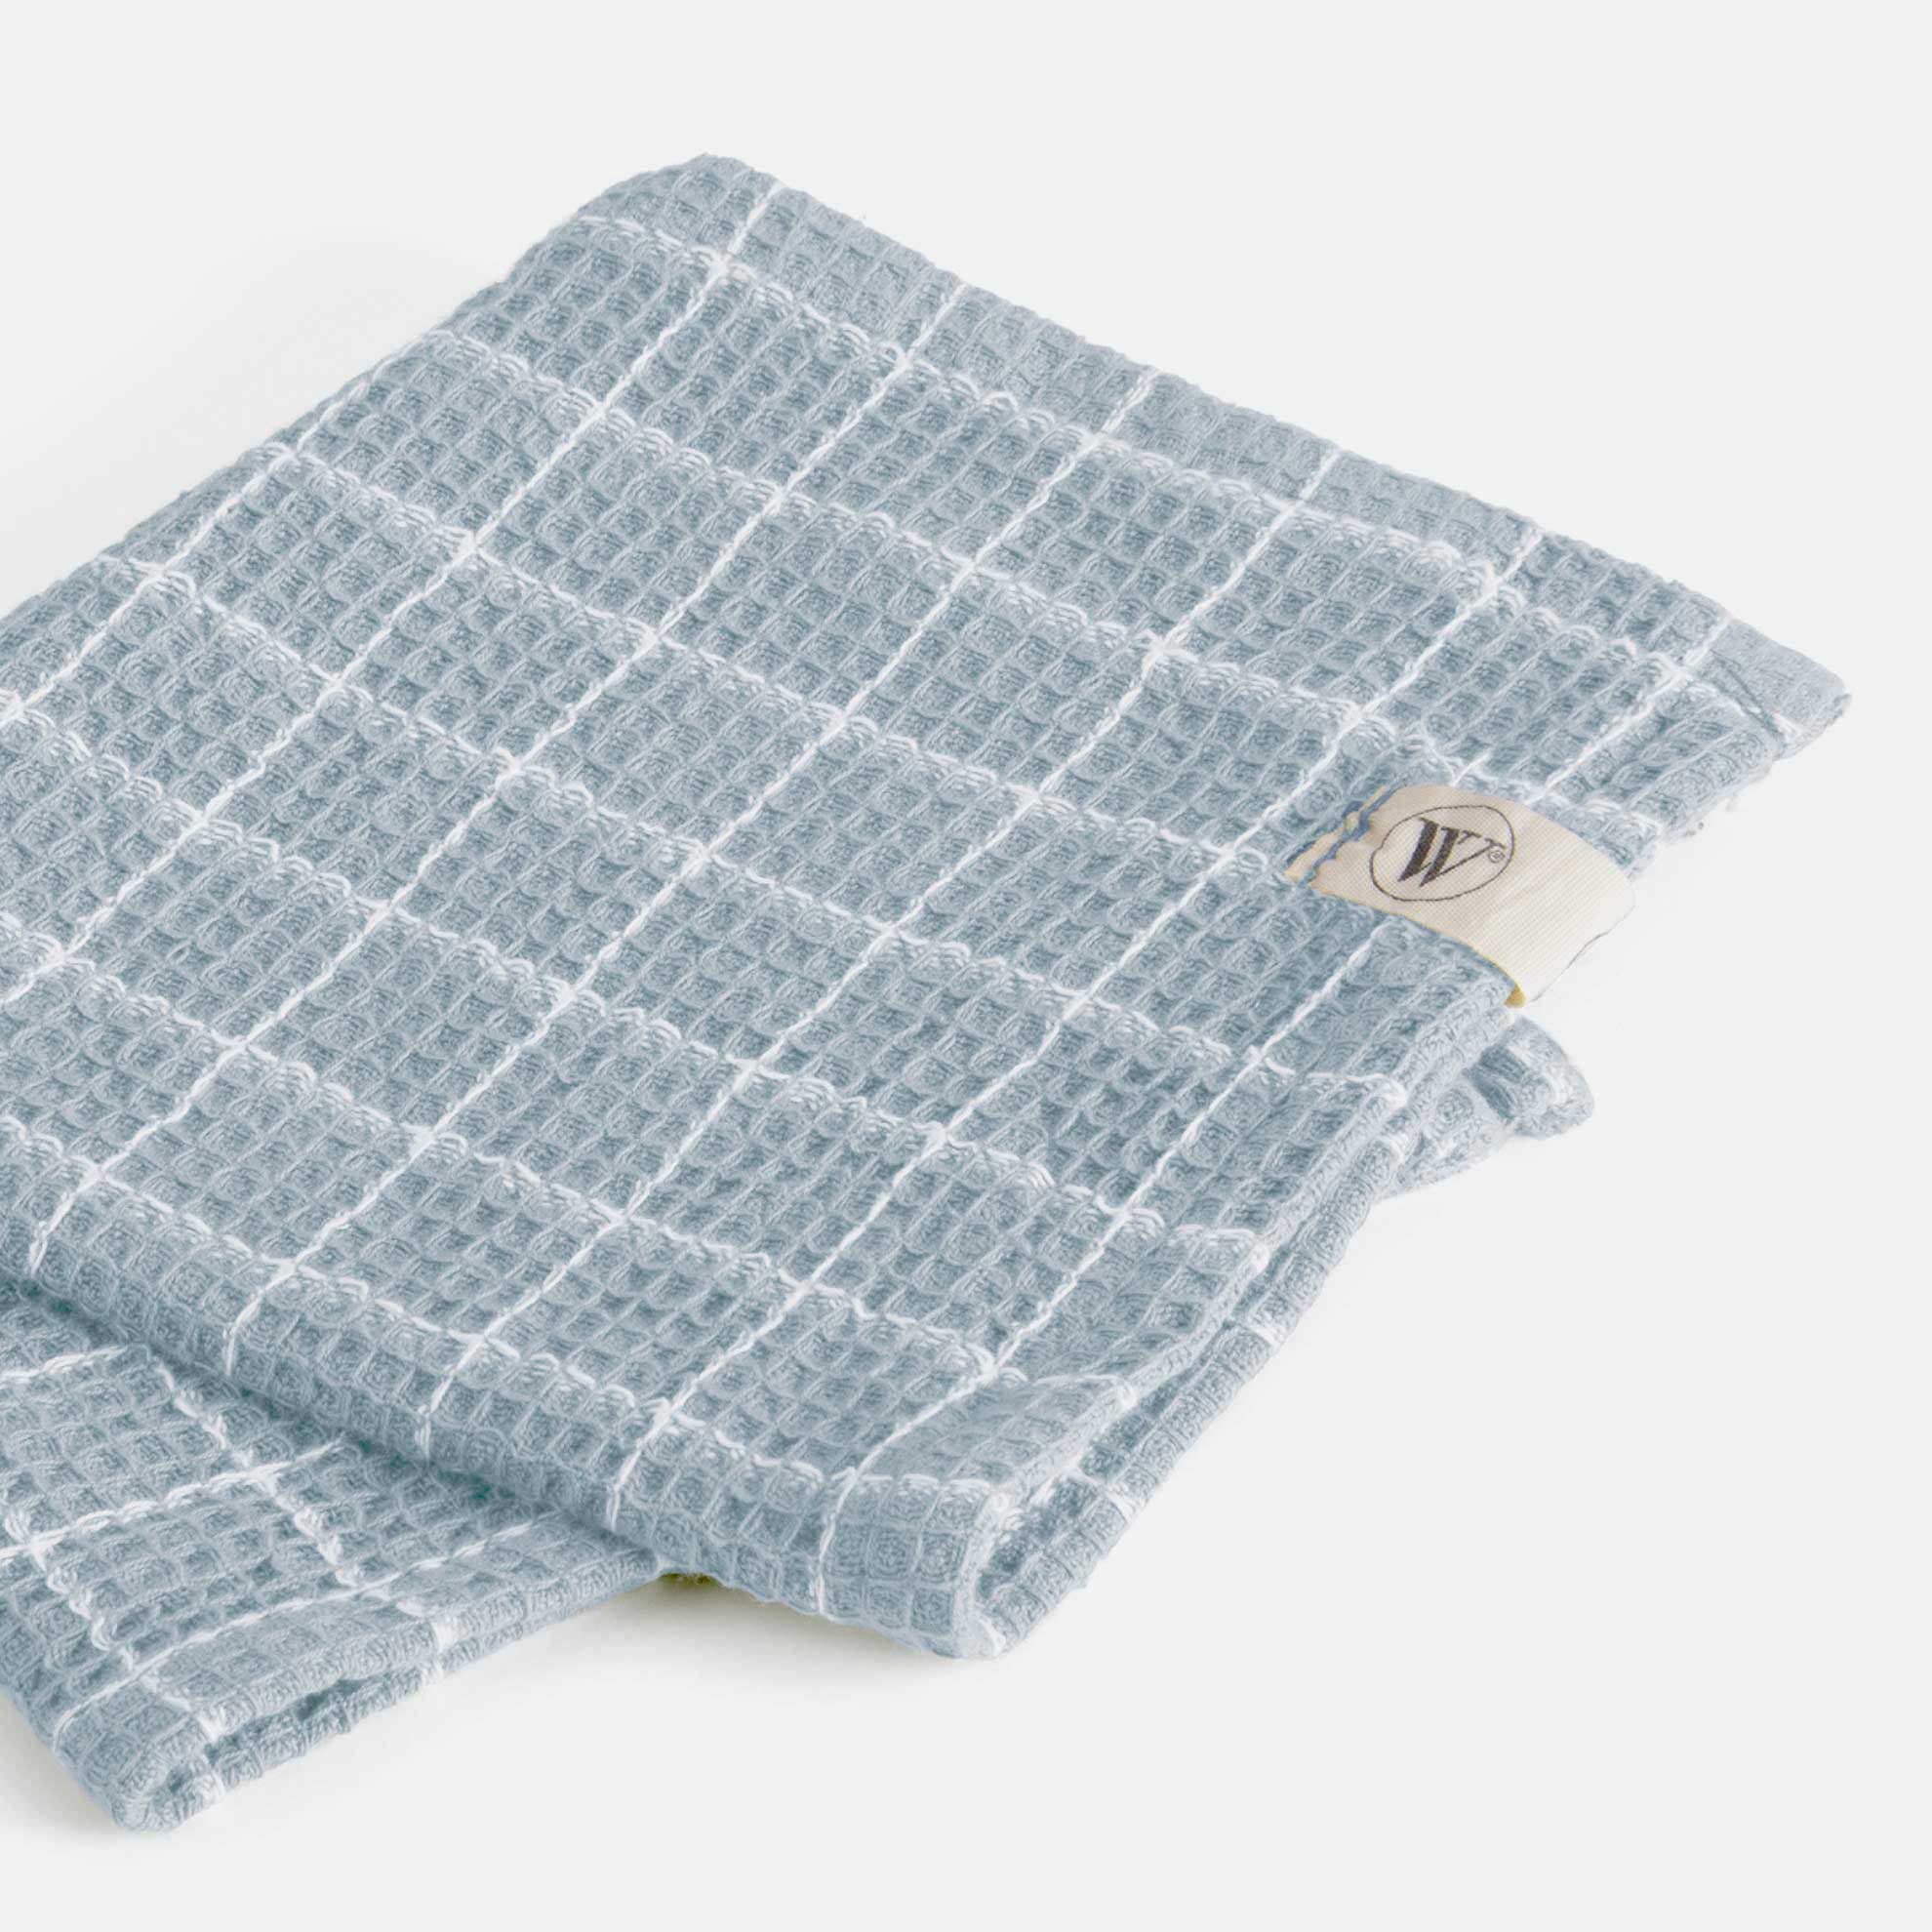 Vaatdoek Dry with Cubes Jeans Blauw 3x 30x30